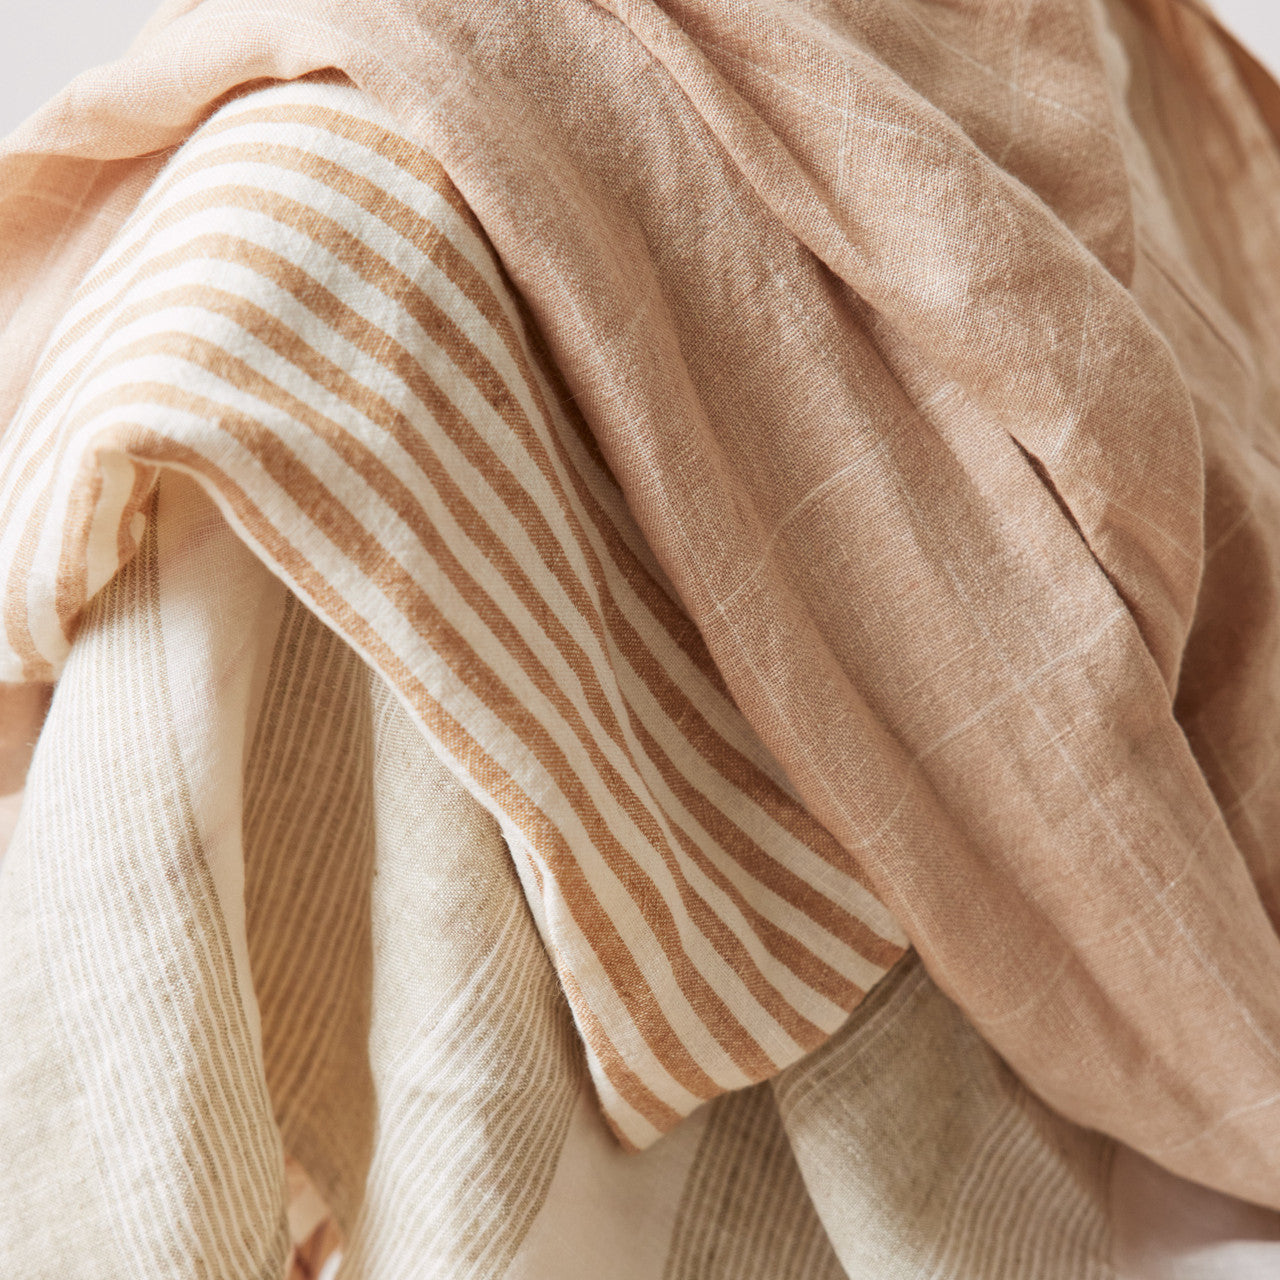 Tangier Striped Linen Tea Towel Set of 2 - Dune